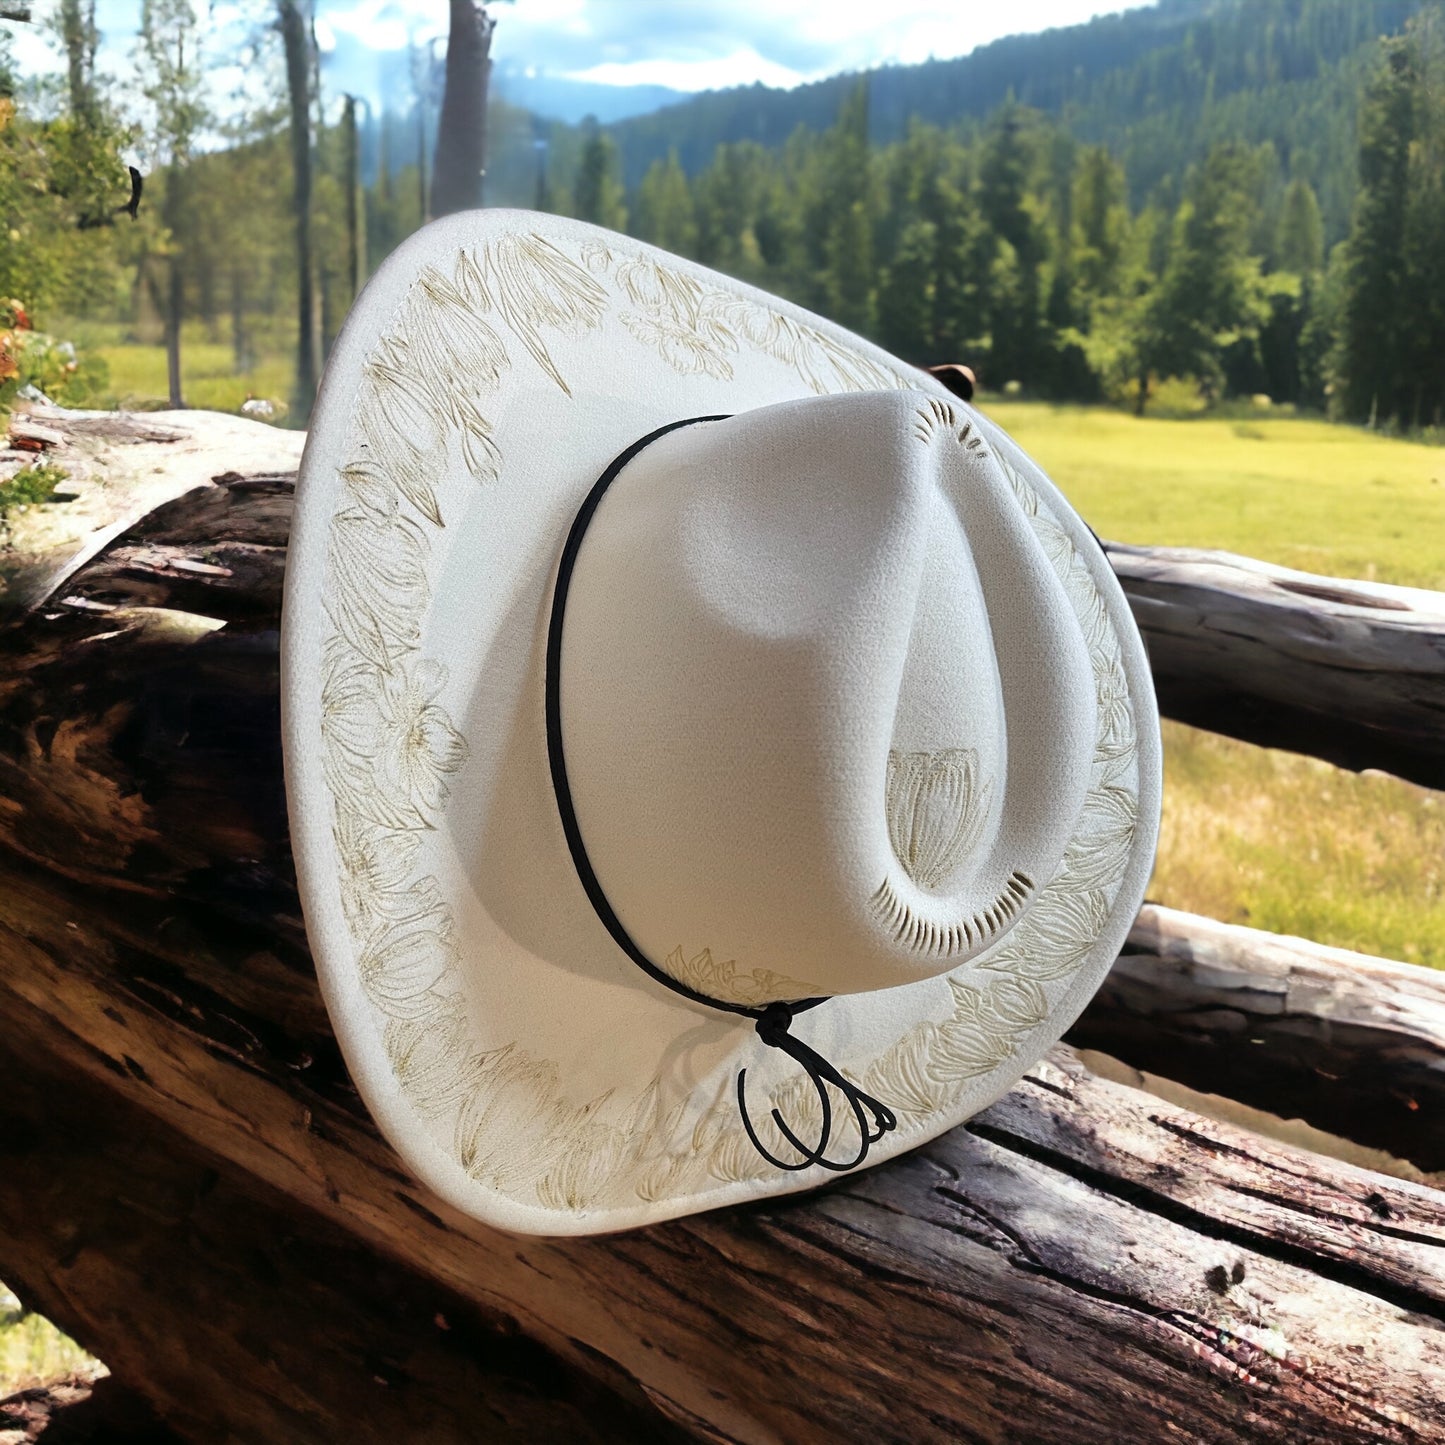 Nani- Burned Cowboy Style Hat